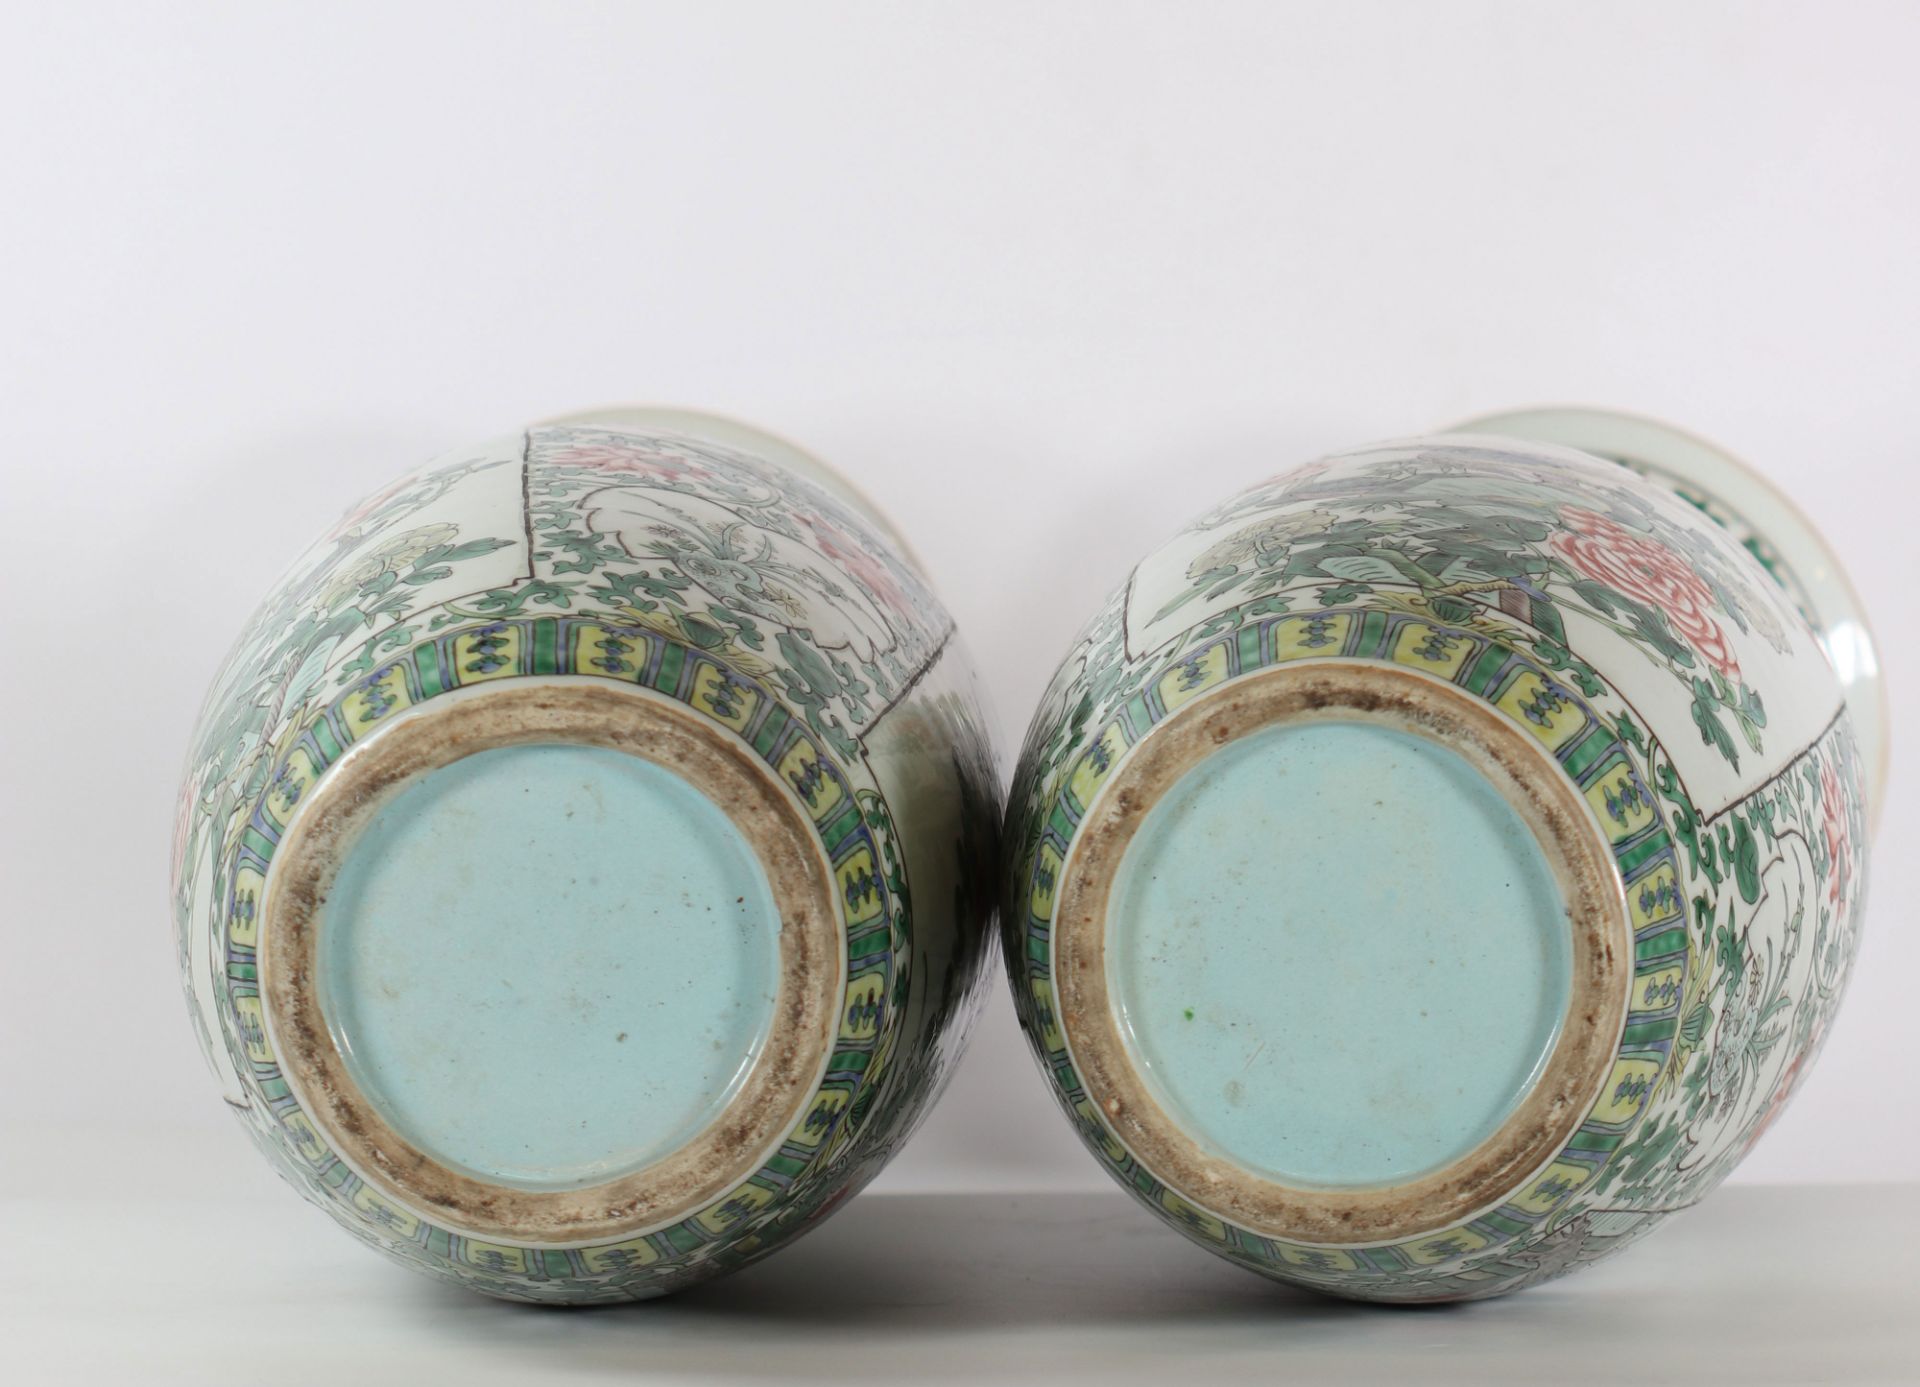 China pair of famille verte porcelain vase 19th bird decor - Image 5 of 5